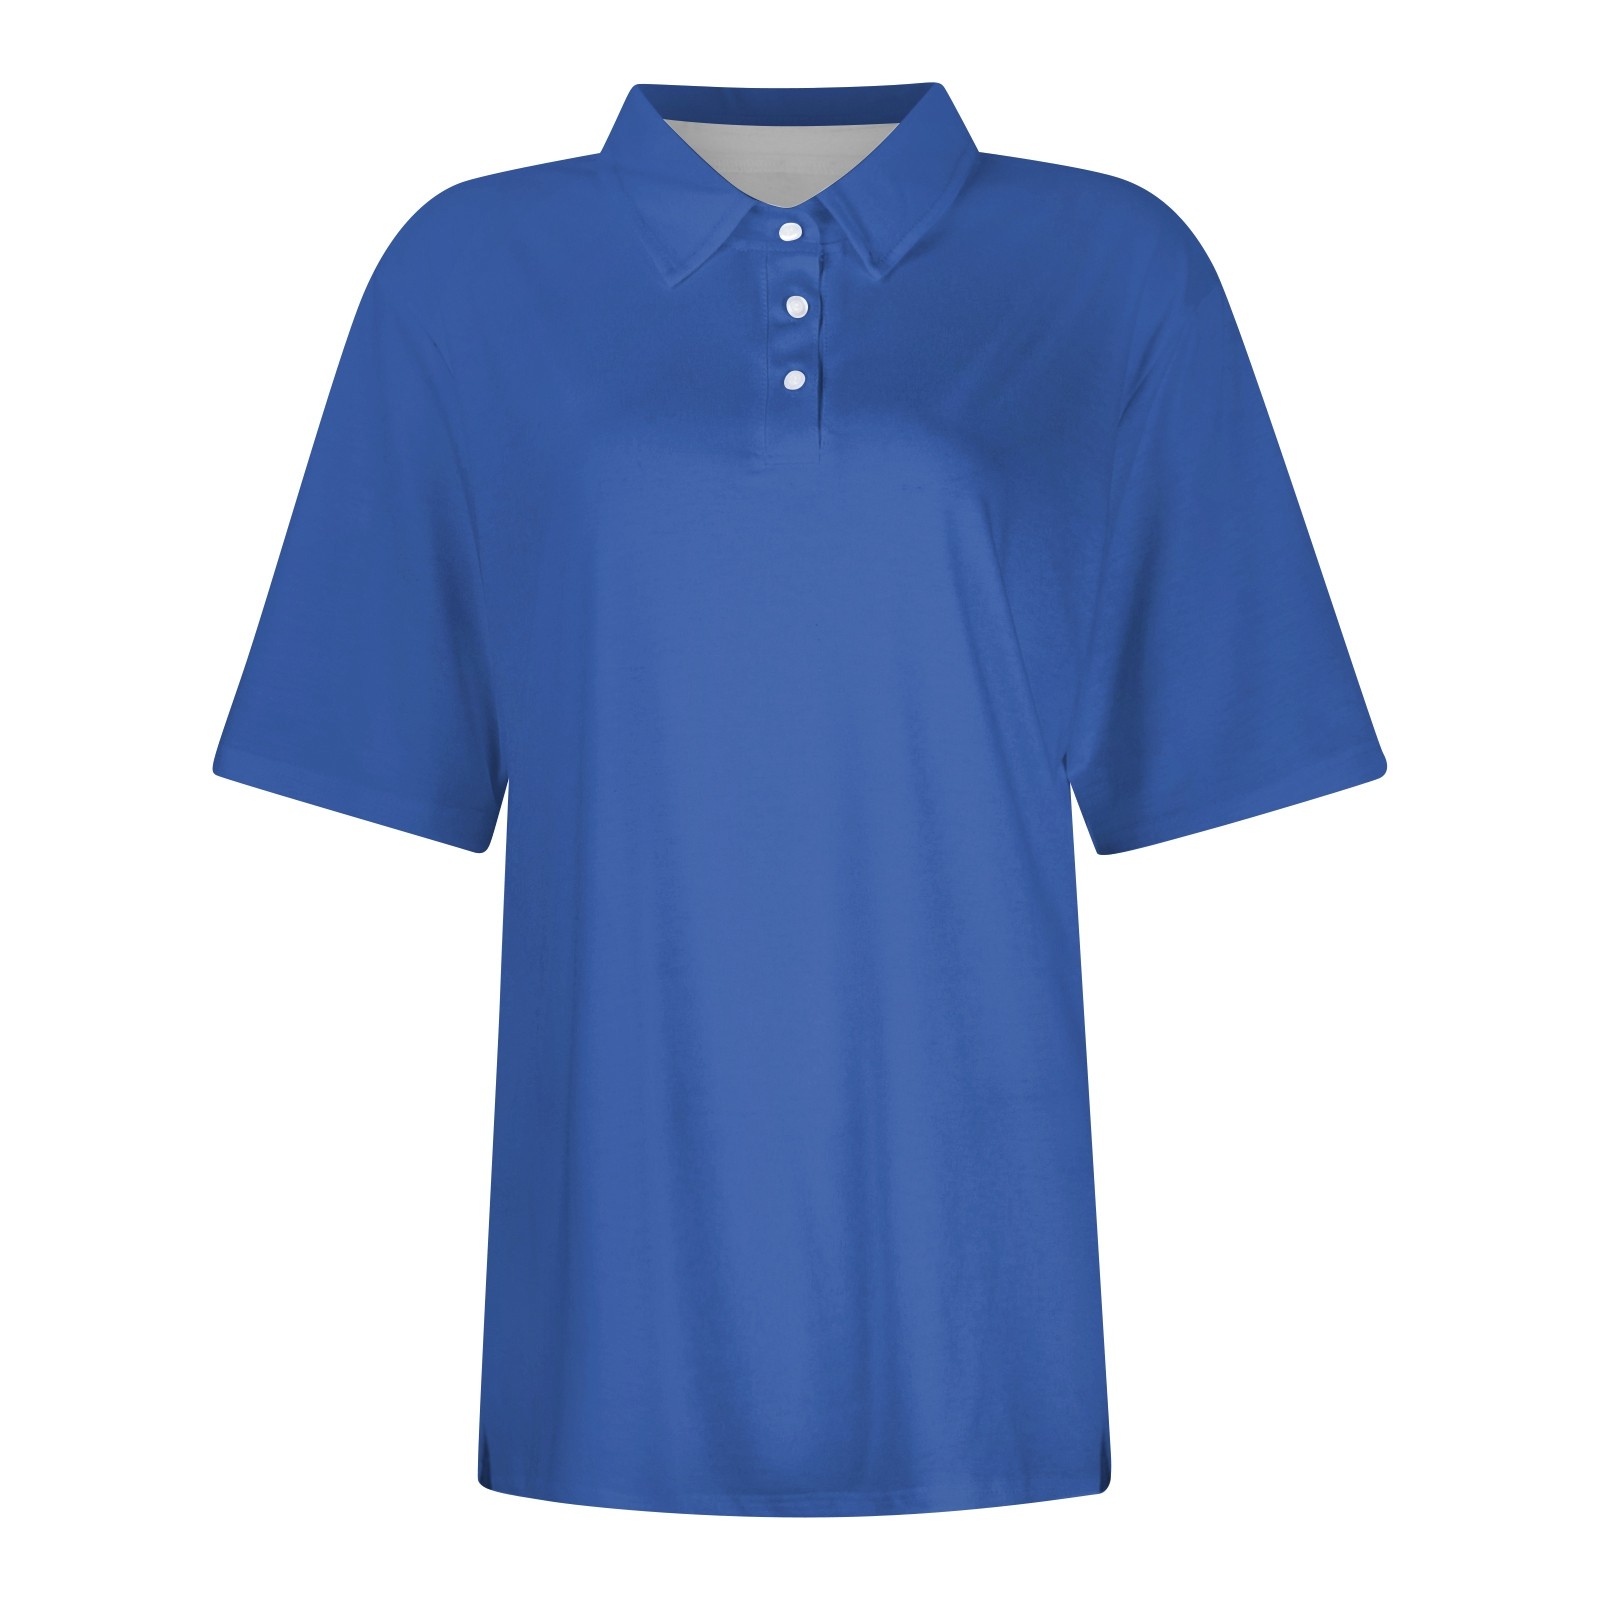 Mohiass Golf Polo Shirts for Women Summer Quick Dry Short Sleeve Button ...